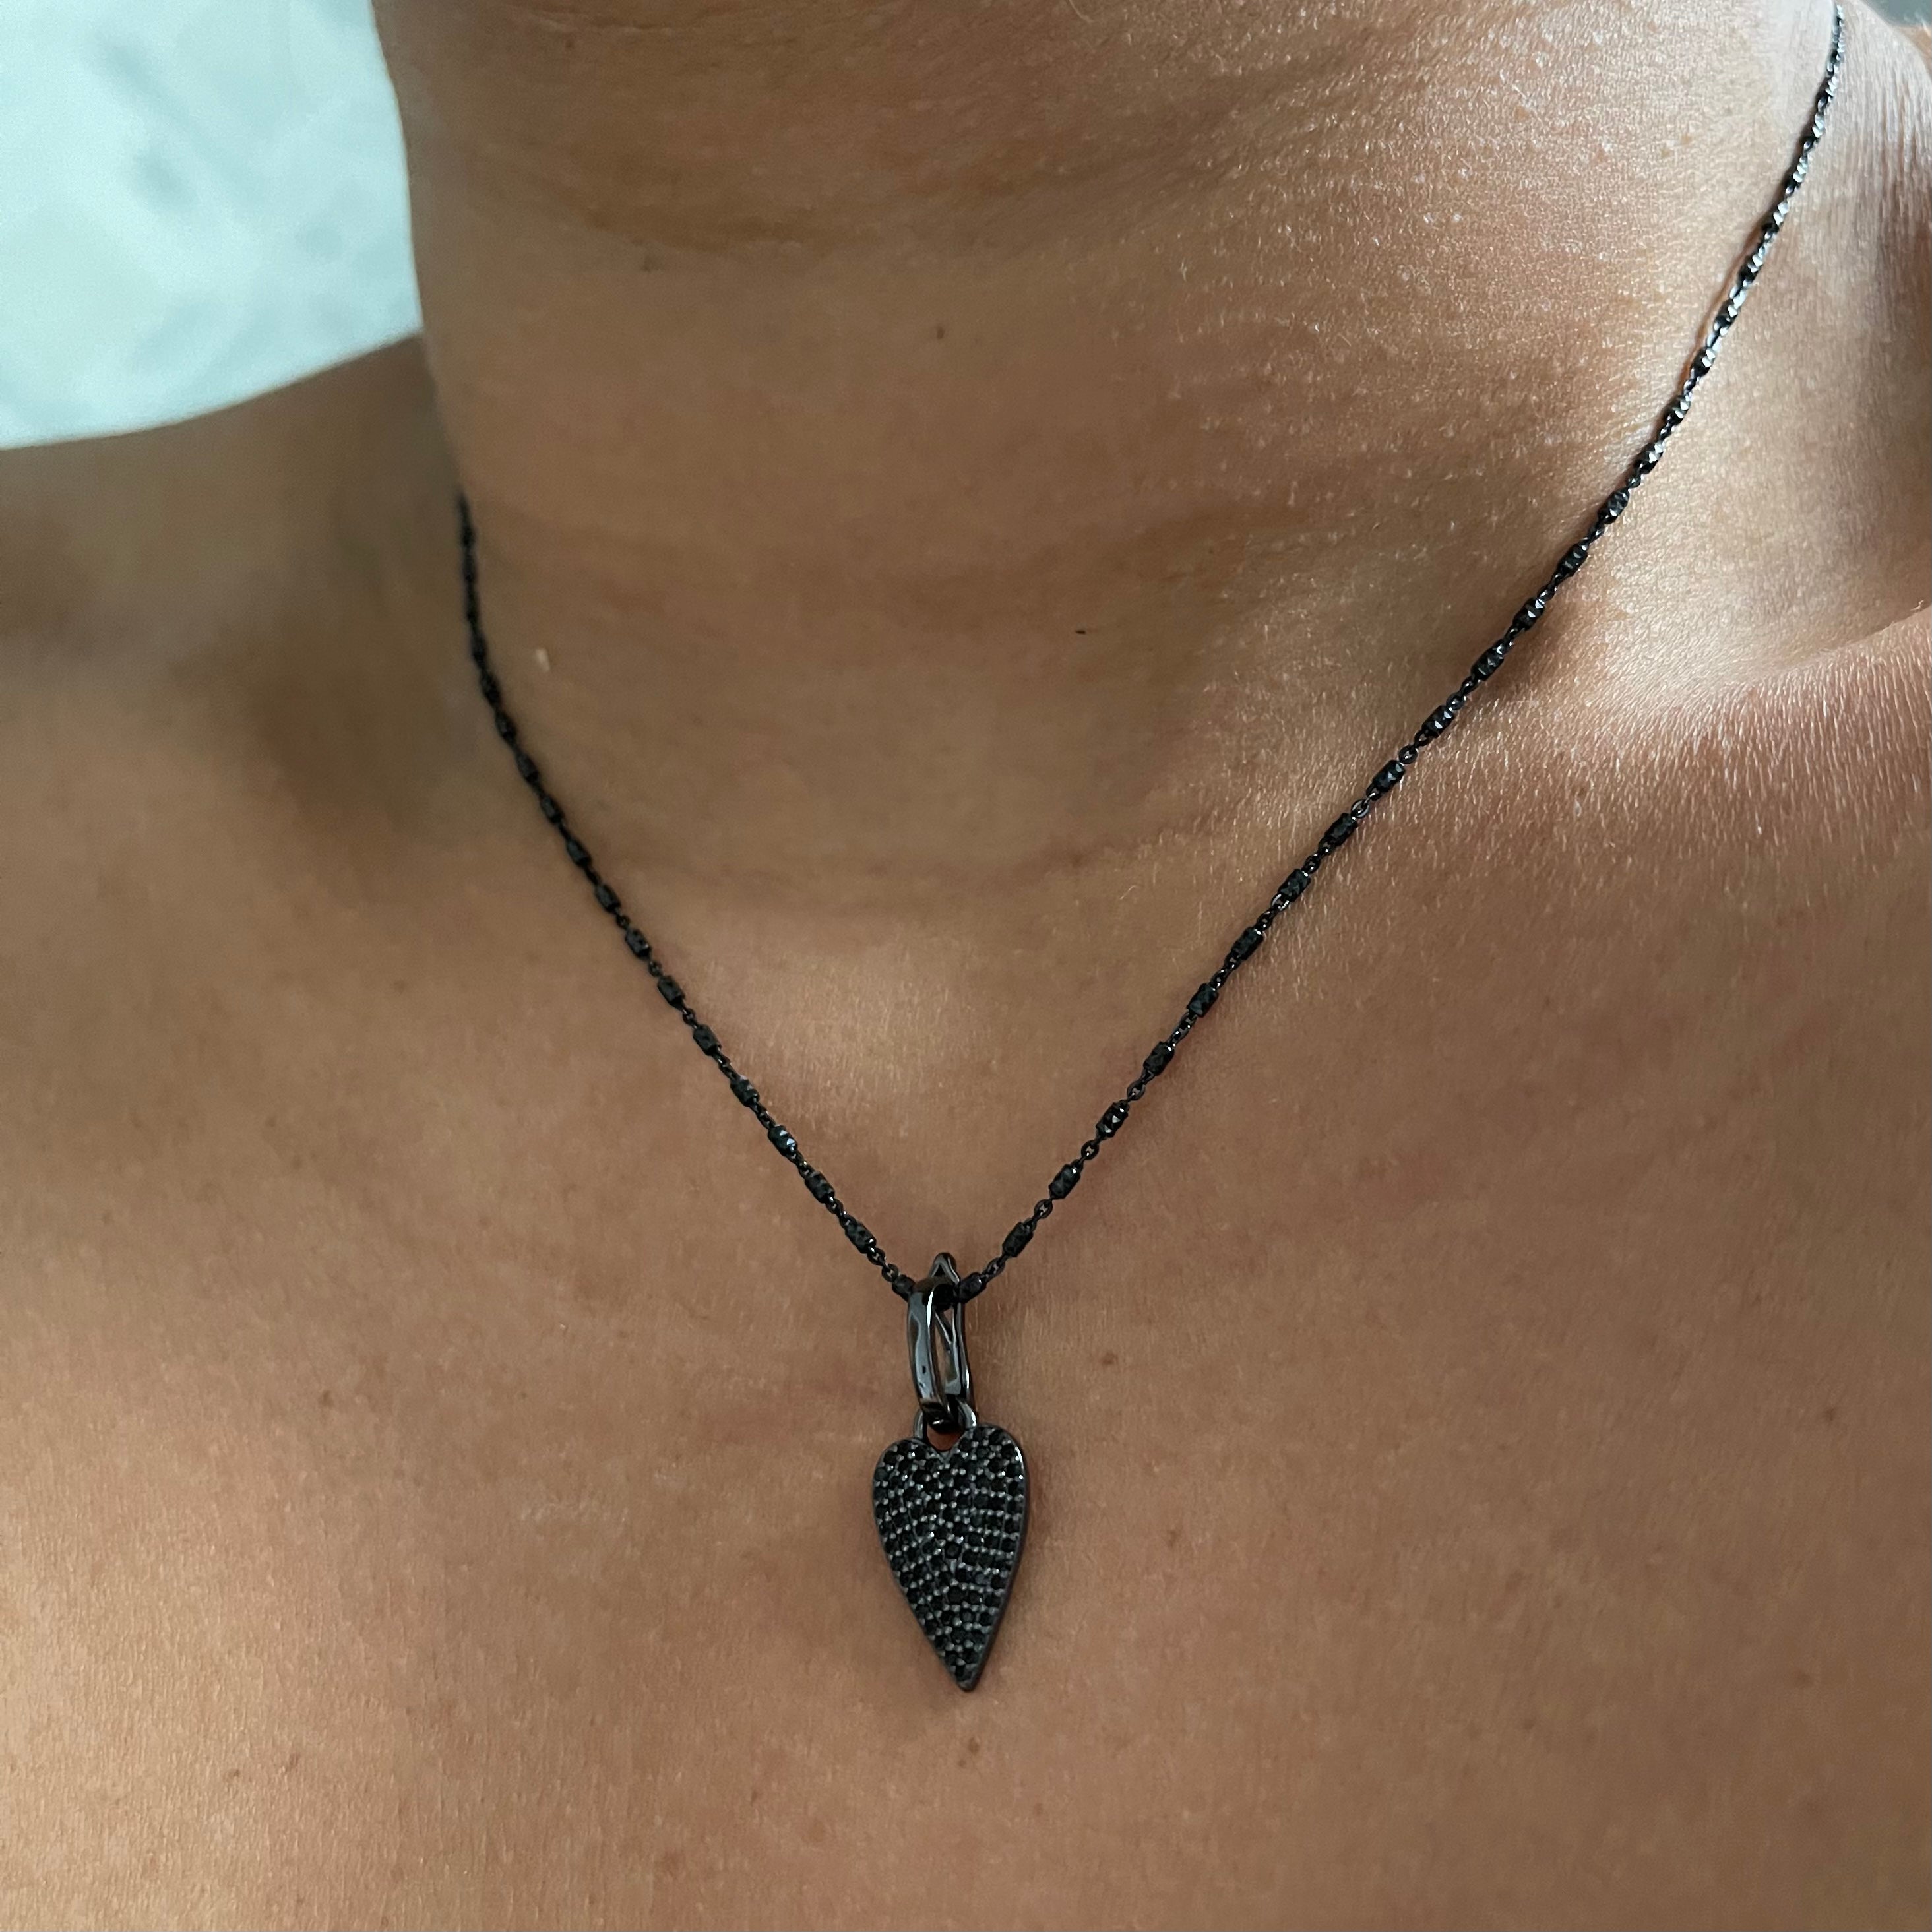 Miniature Black Vertical Heart Necklace